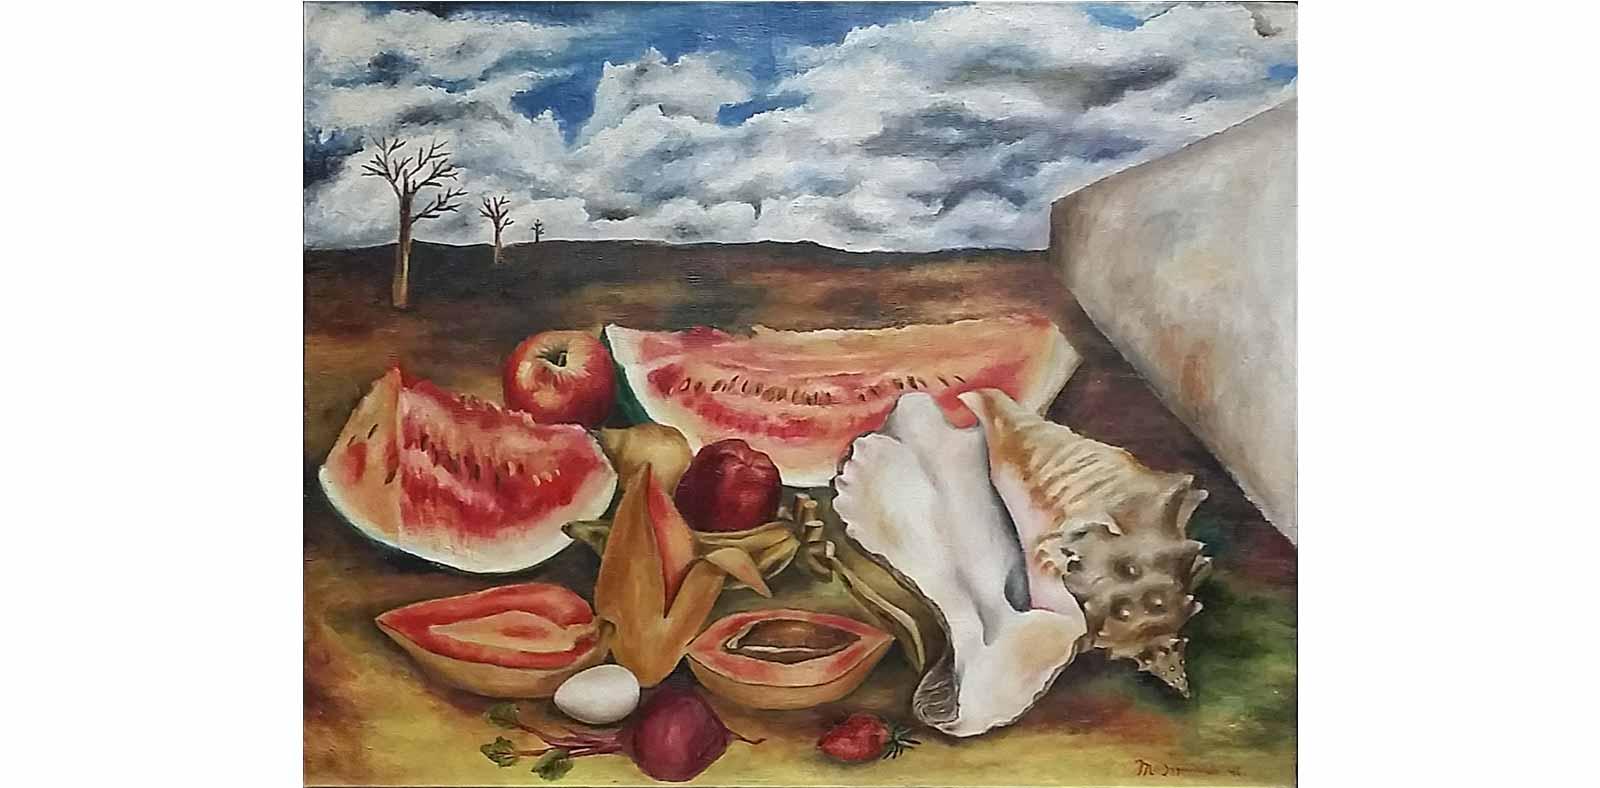 Living Nature - María Izquierdo, oil on canvas, 1946.